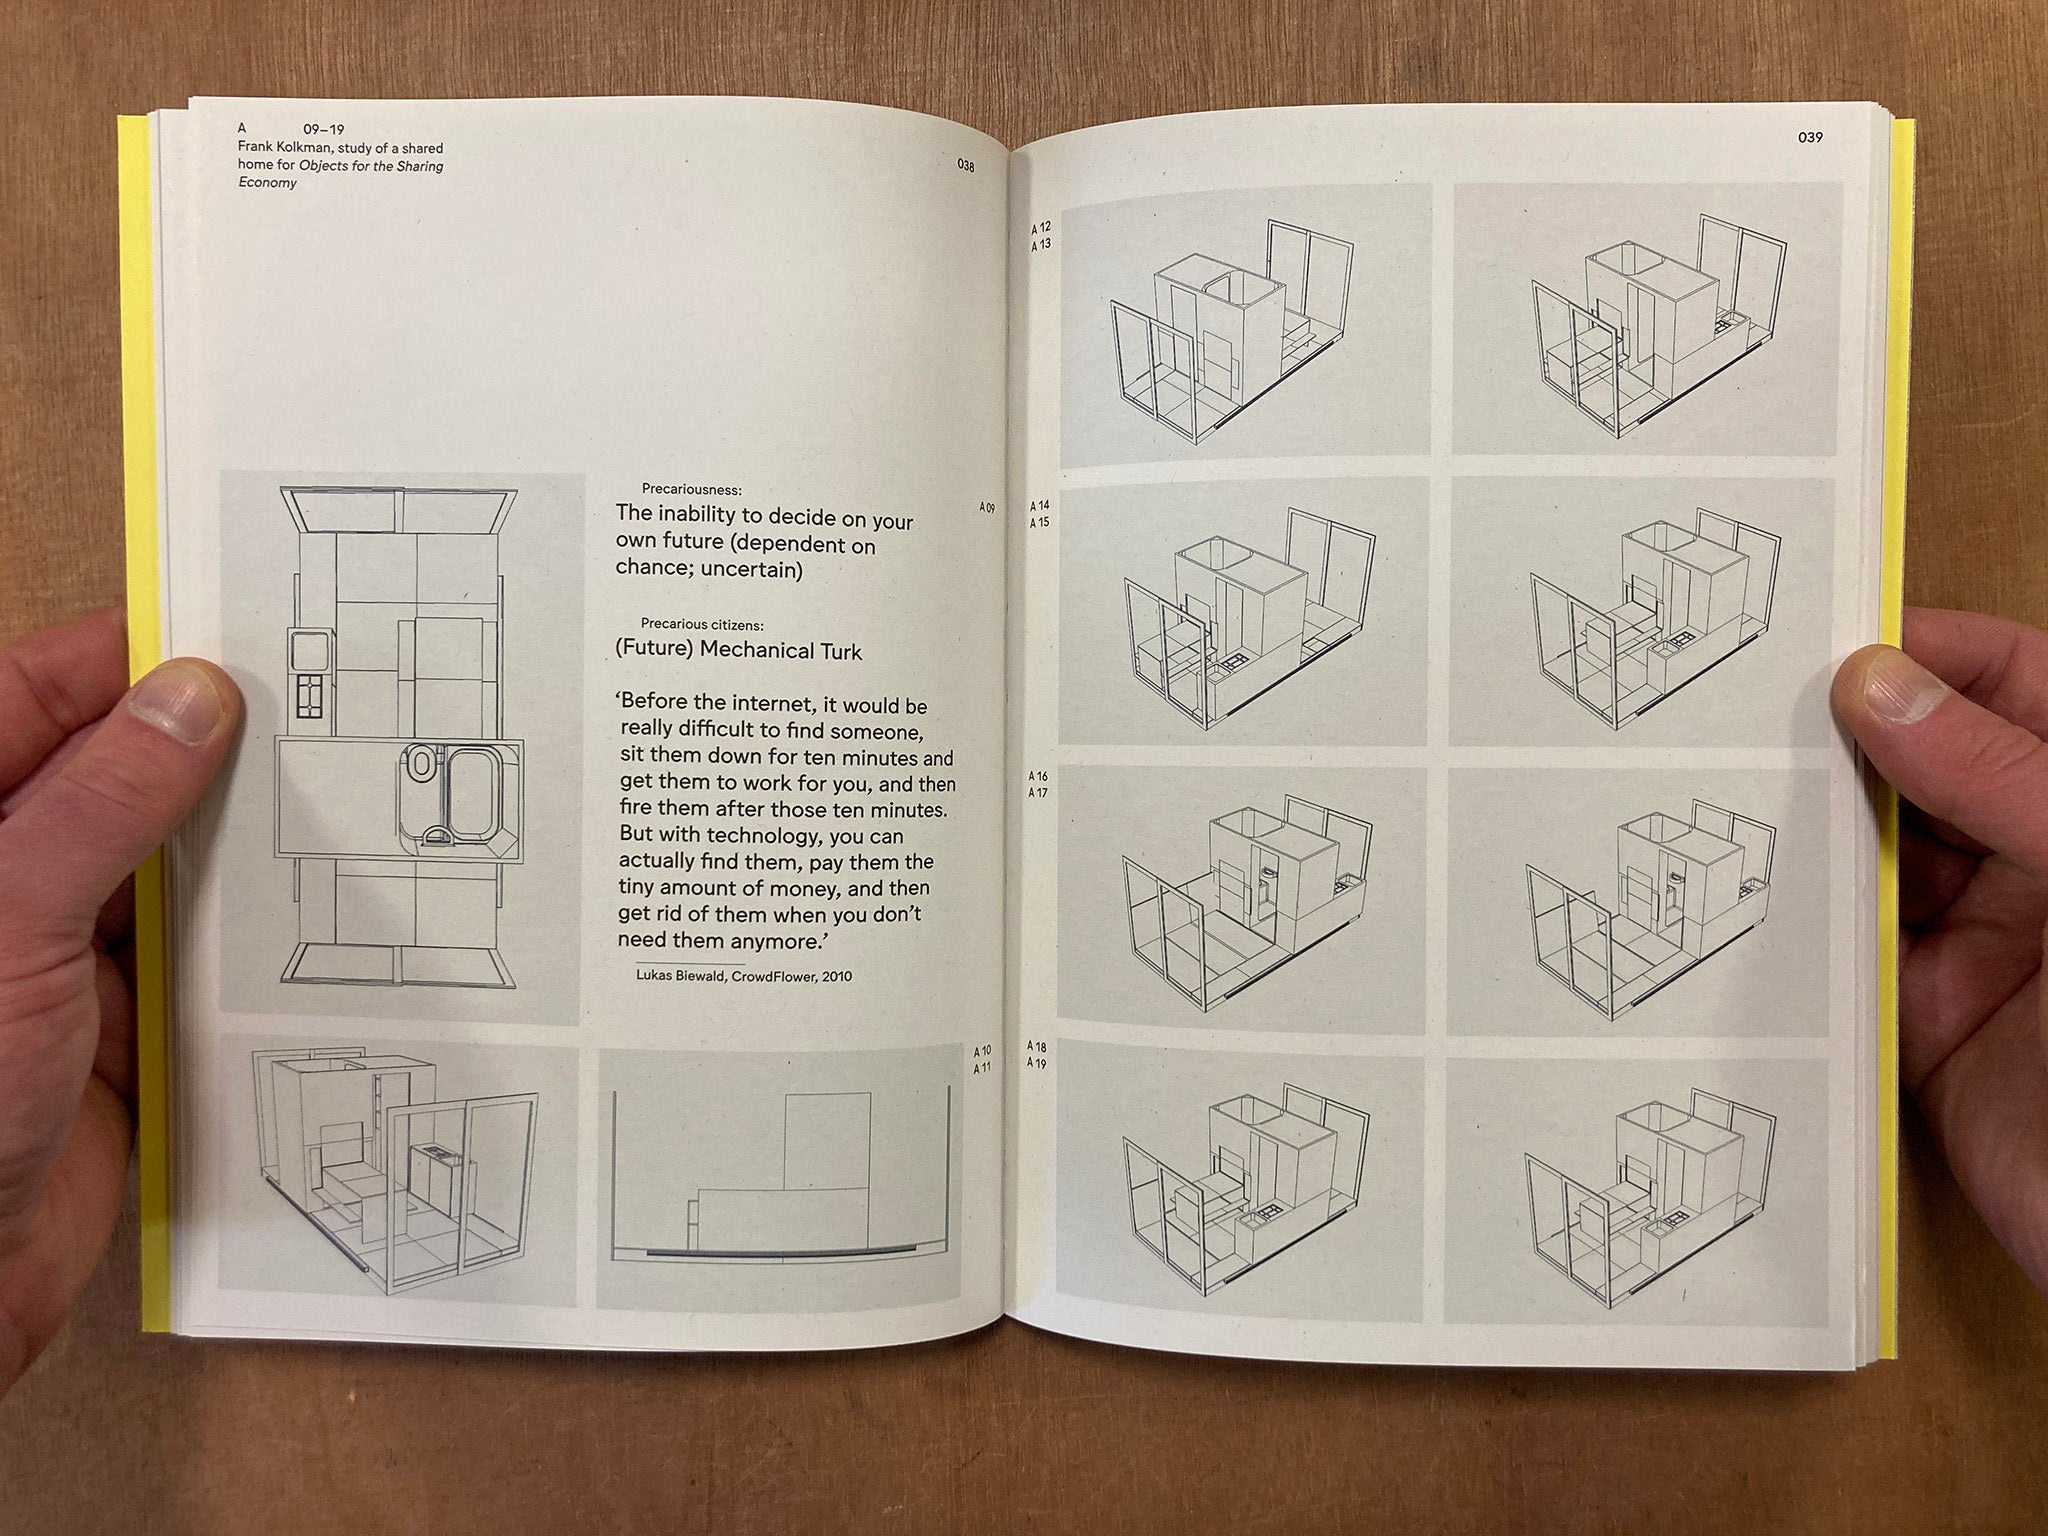 DESIGNING FOR PRECARIOUS CITIZENS: BUILDING ON THE BAUHAUS LEGACY by Jeroen van den Eijnde & Jorn Konijn